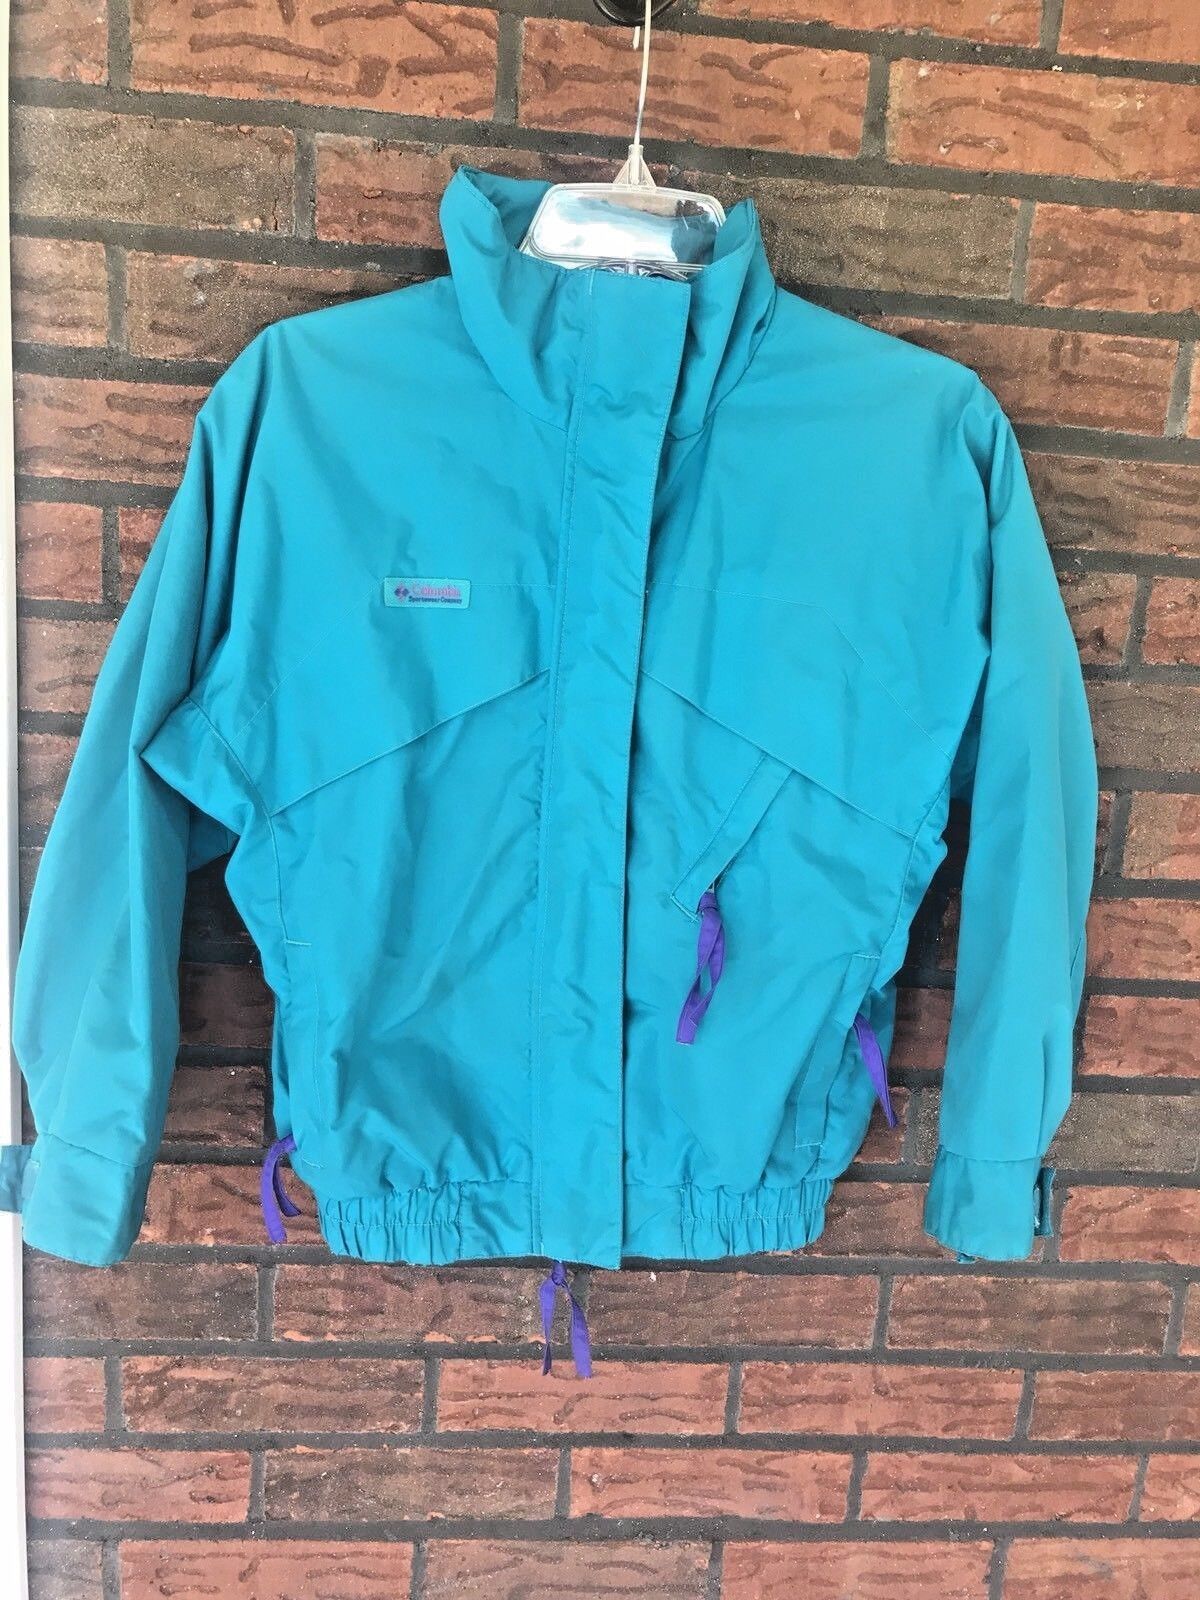 Retro Columbia Sportswear 10/12 Youth Medium Whirlibird Radial Sleev Jacket Coat - $5.70